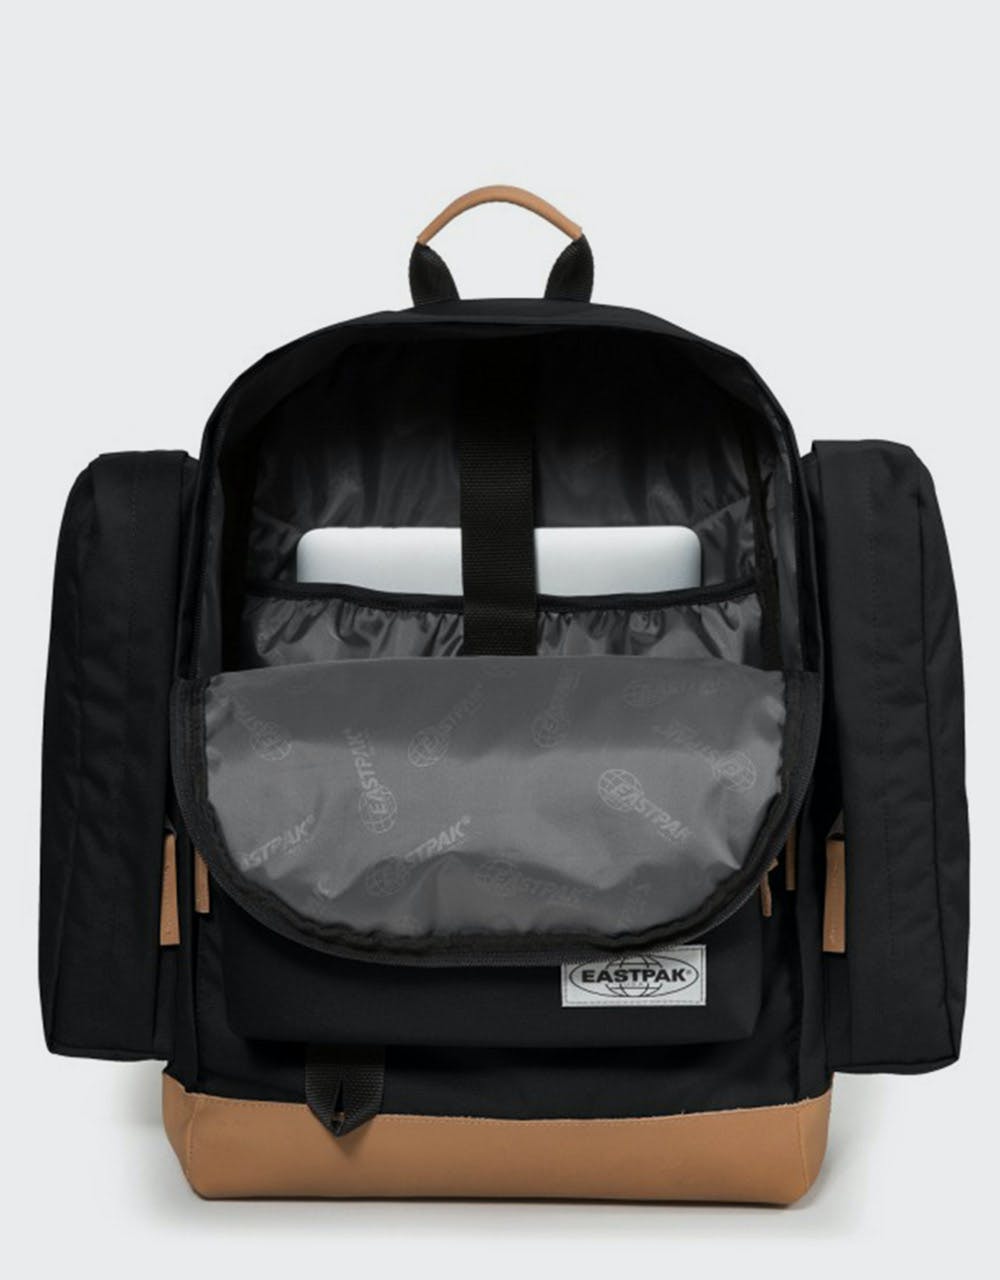 Eastpak Killington Backpack - Into Black